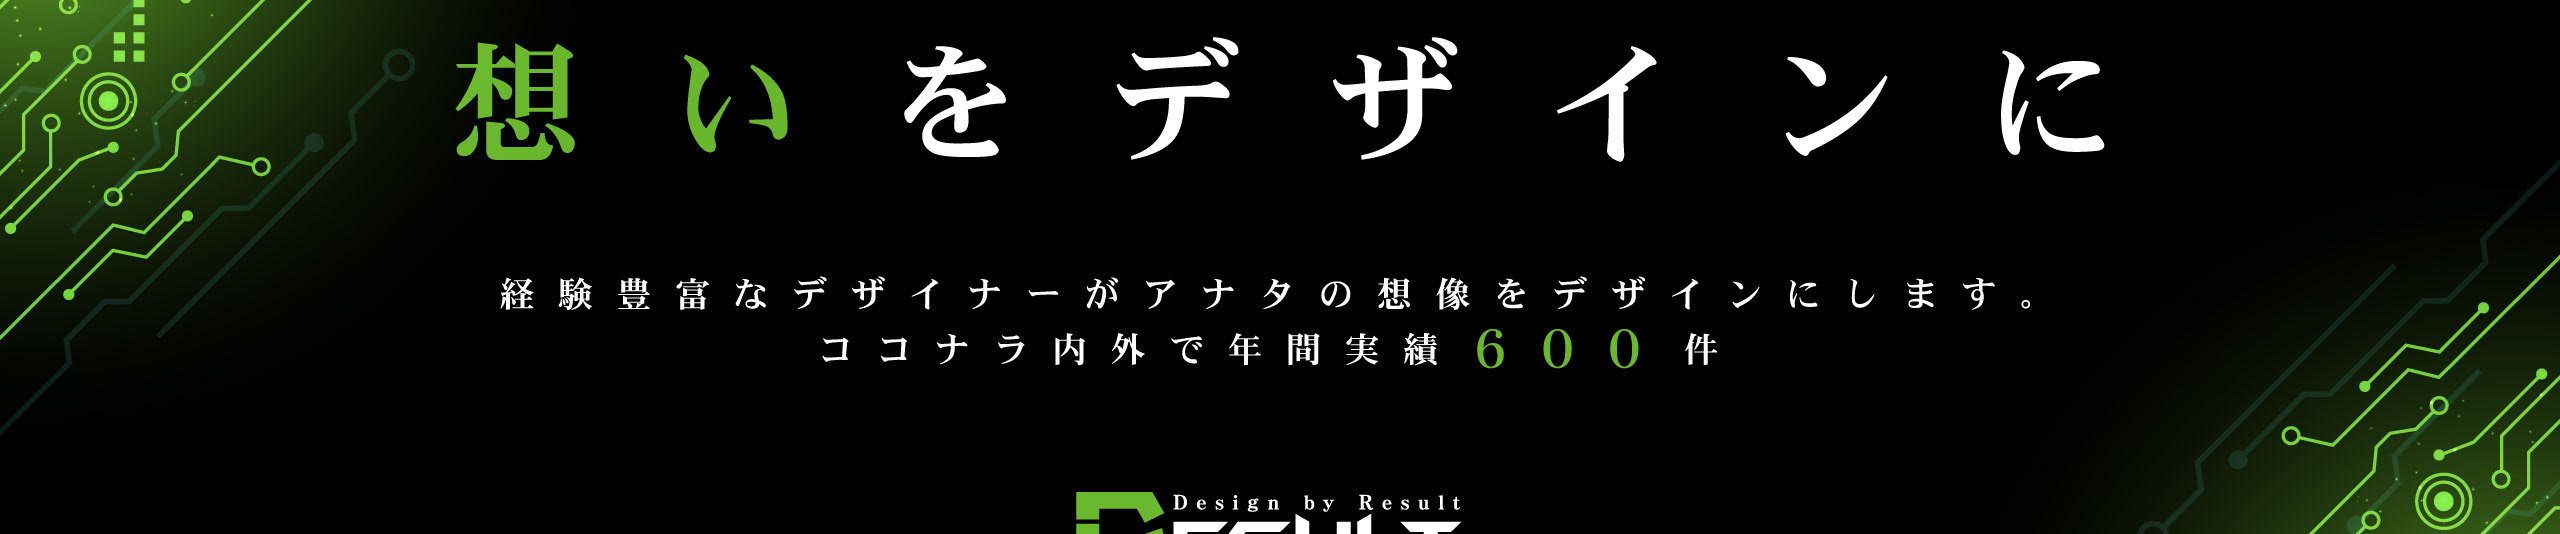 DESIGNTEAM DESULT's profile banner